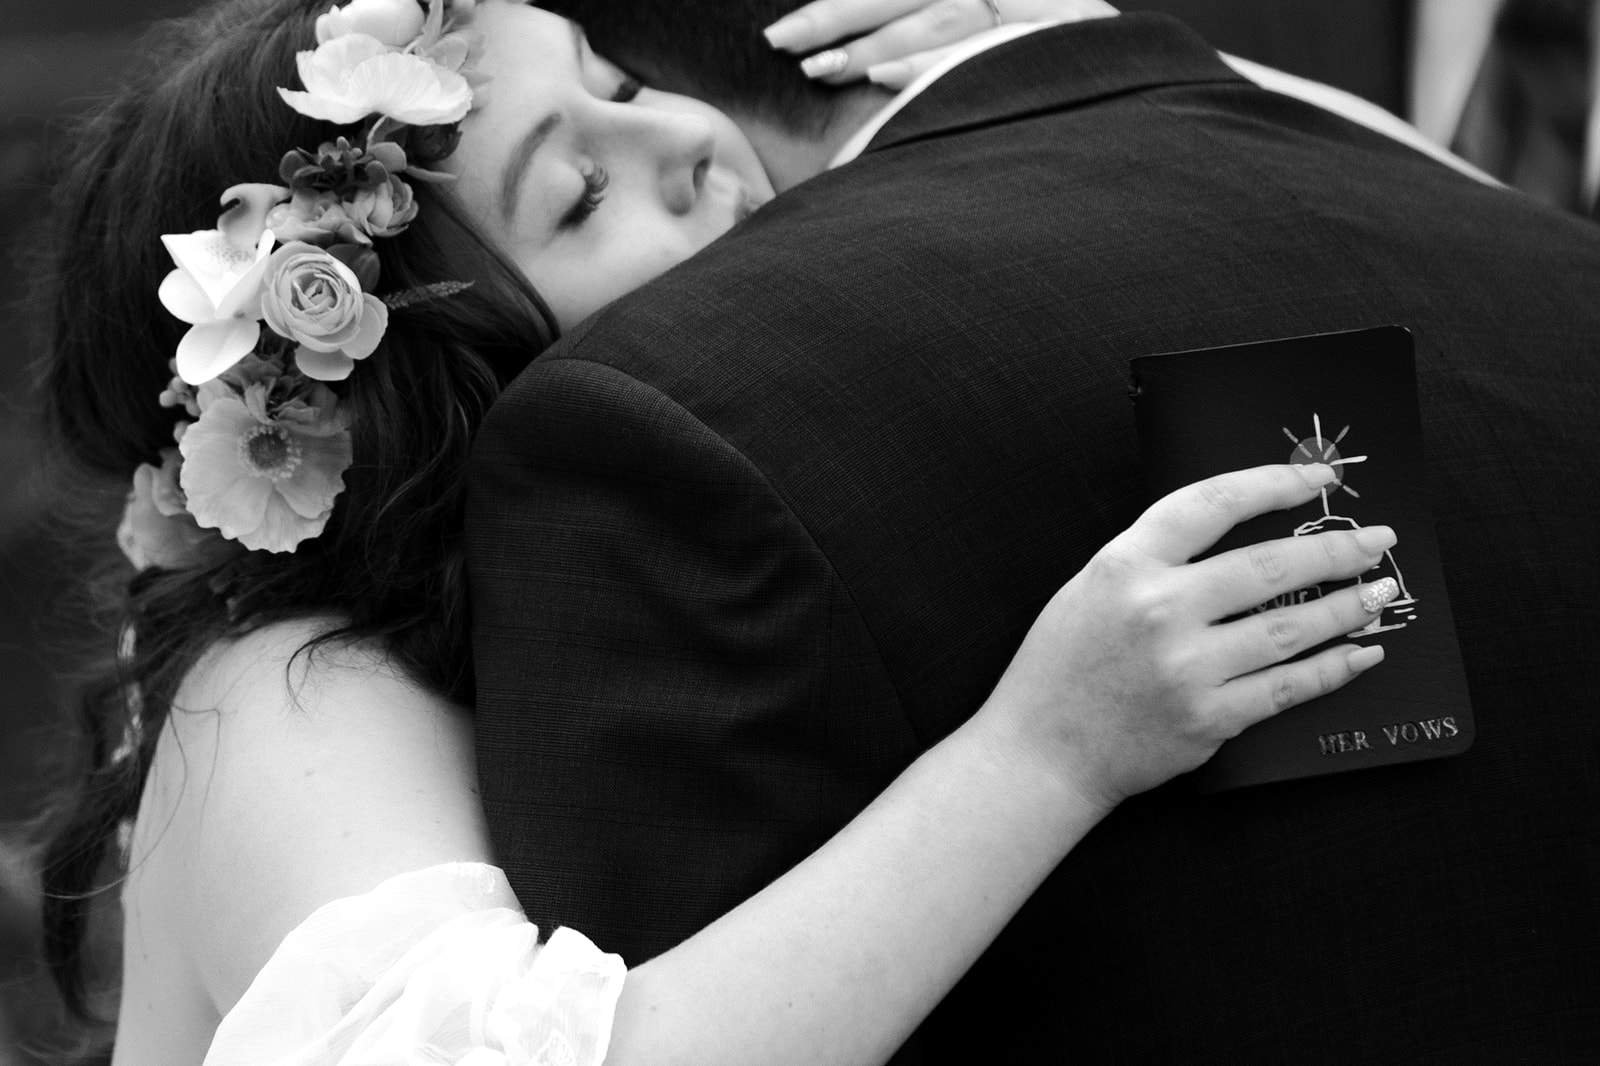 A woman in a wedding dress hugs a man in a suit